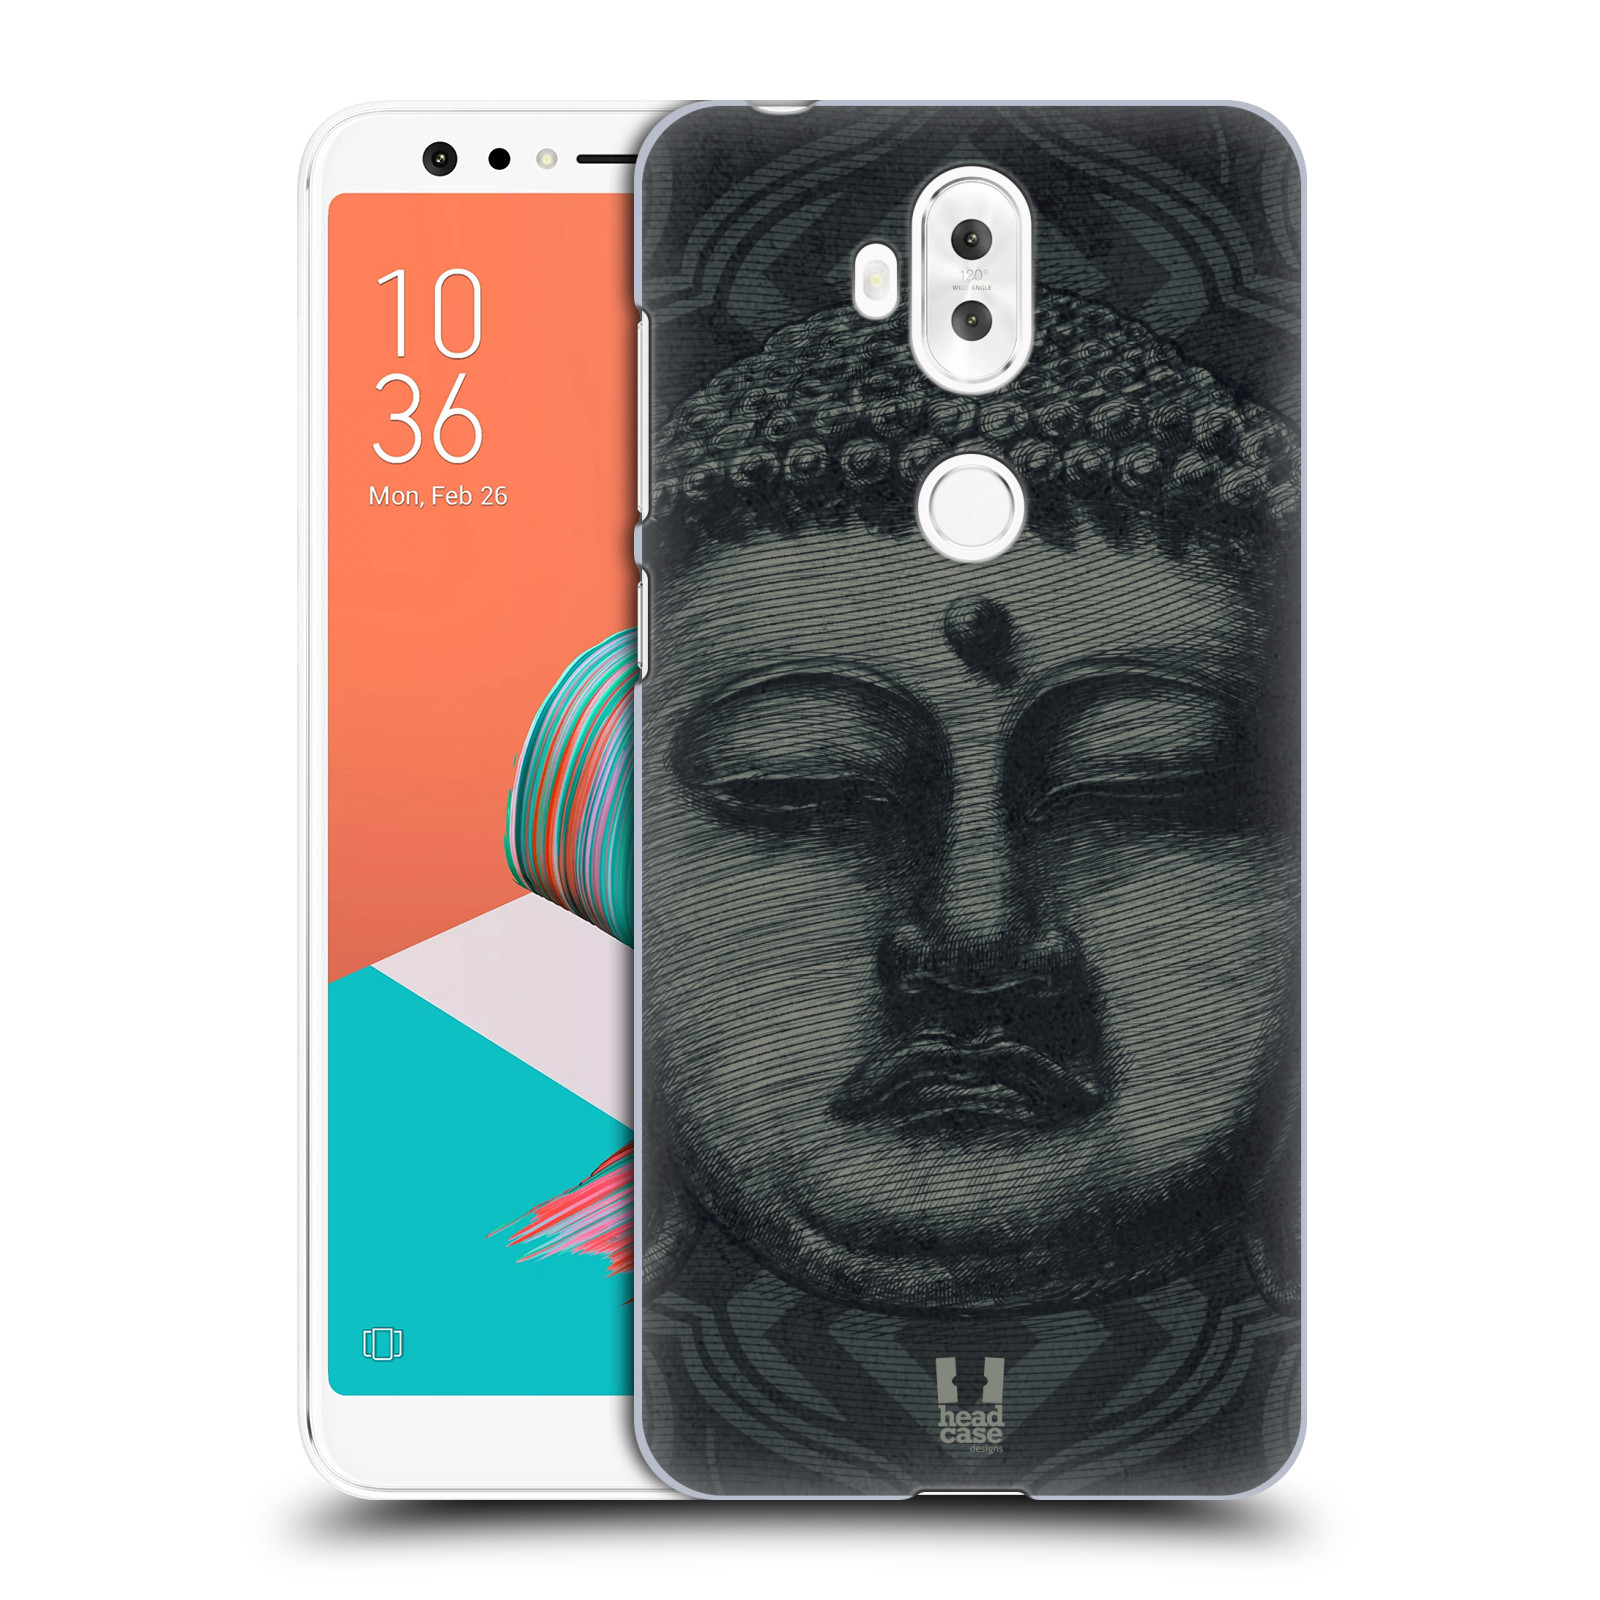 HEAD CASE plastový obal na mobil Asus Zenfone 5 LITE ZC600KL vzor BUDDHA KAMAKURA tvář